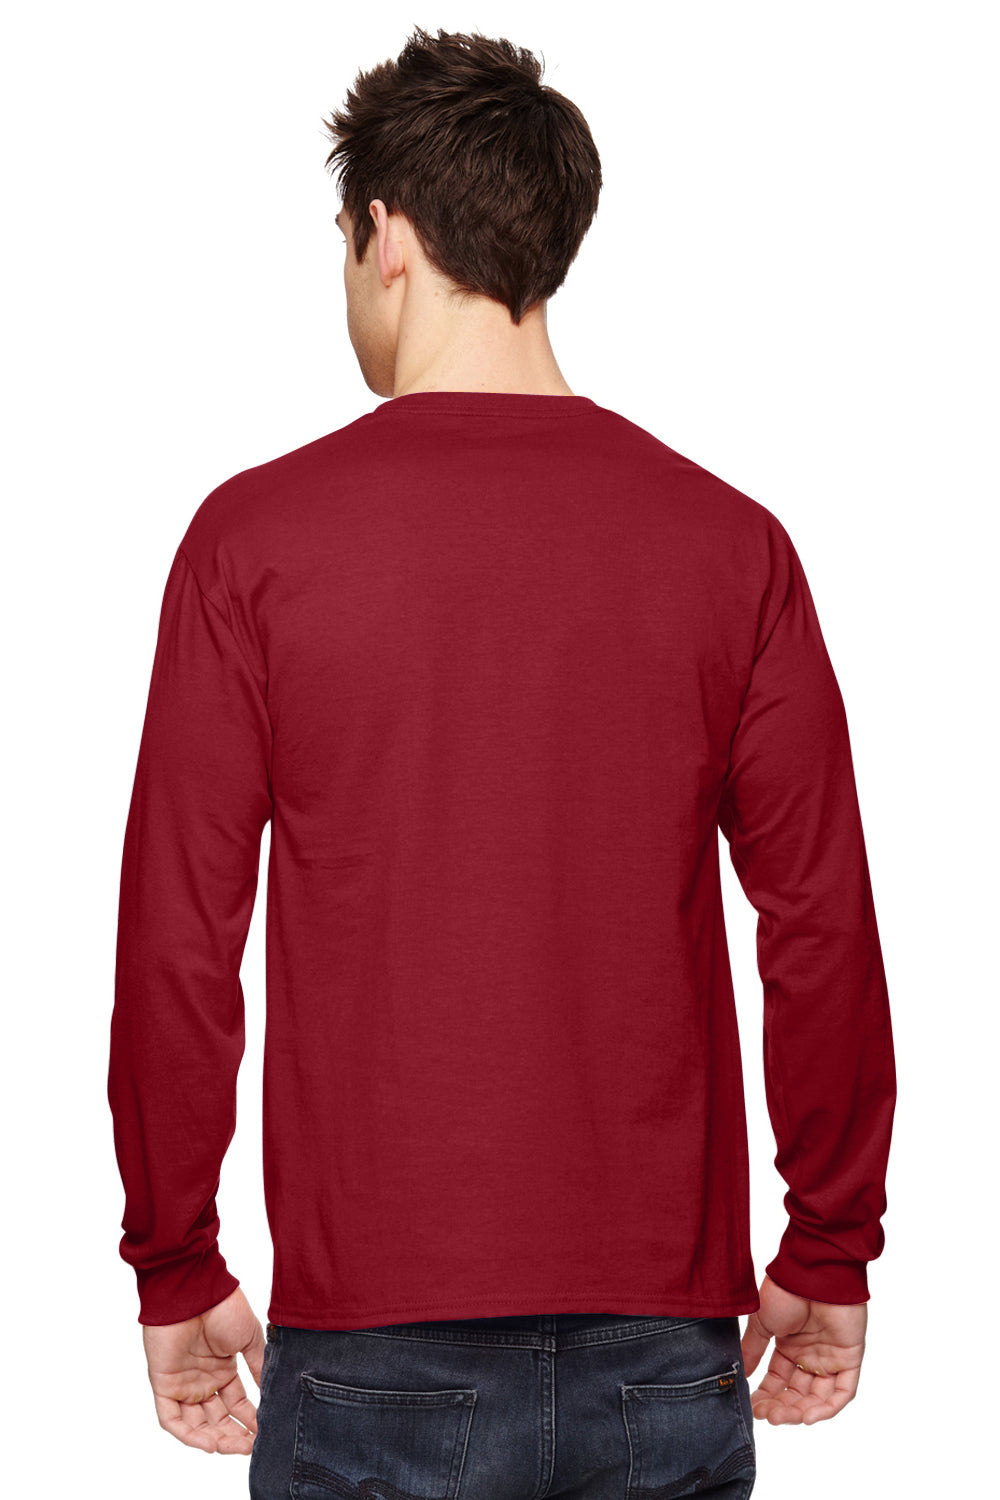 Fruit Of The Loom 4930 Mens HD Jersey Long Sleeve Crewneck T-Shirt Crimson Red Back